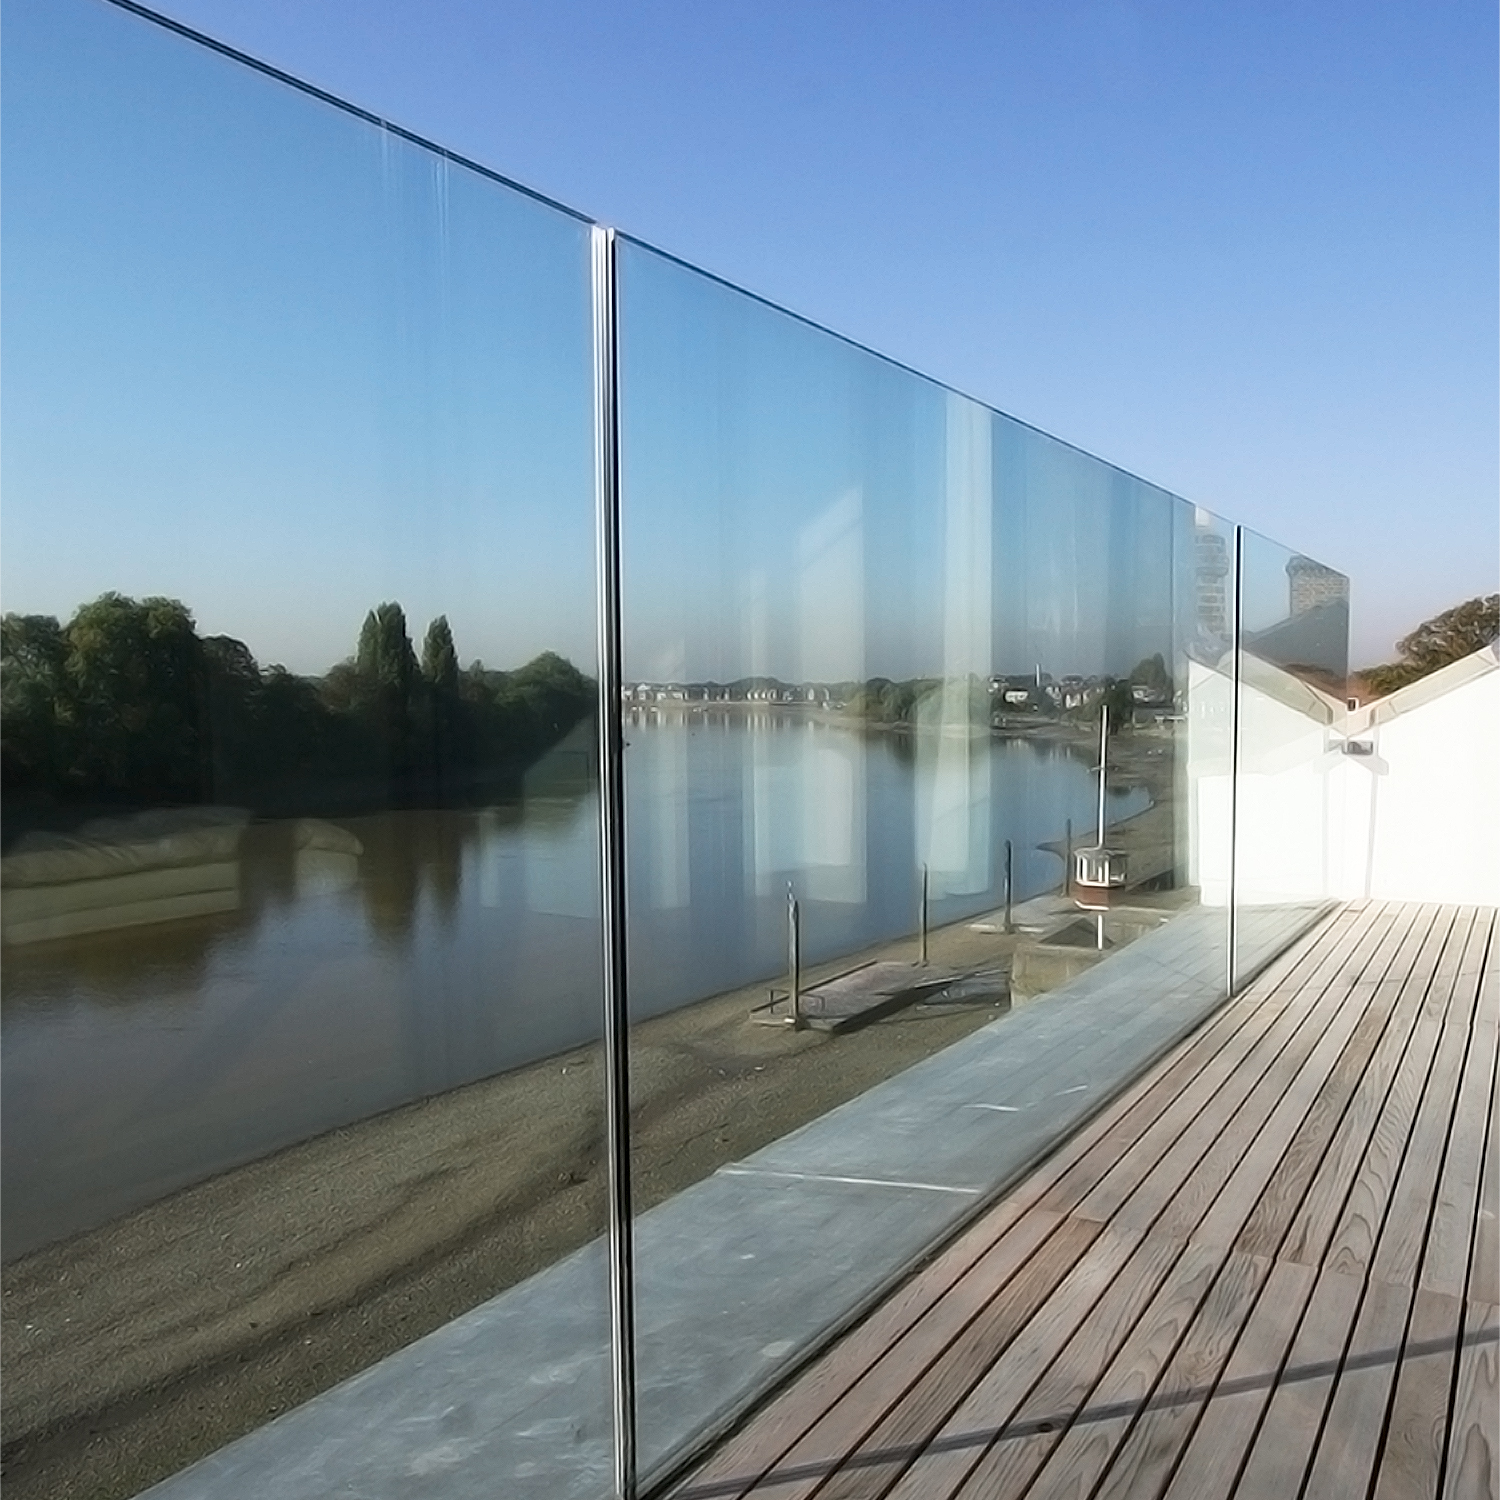 Embedded glass railing on decking